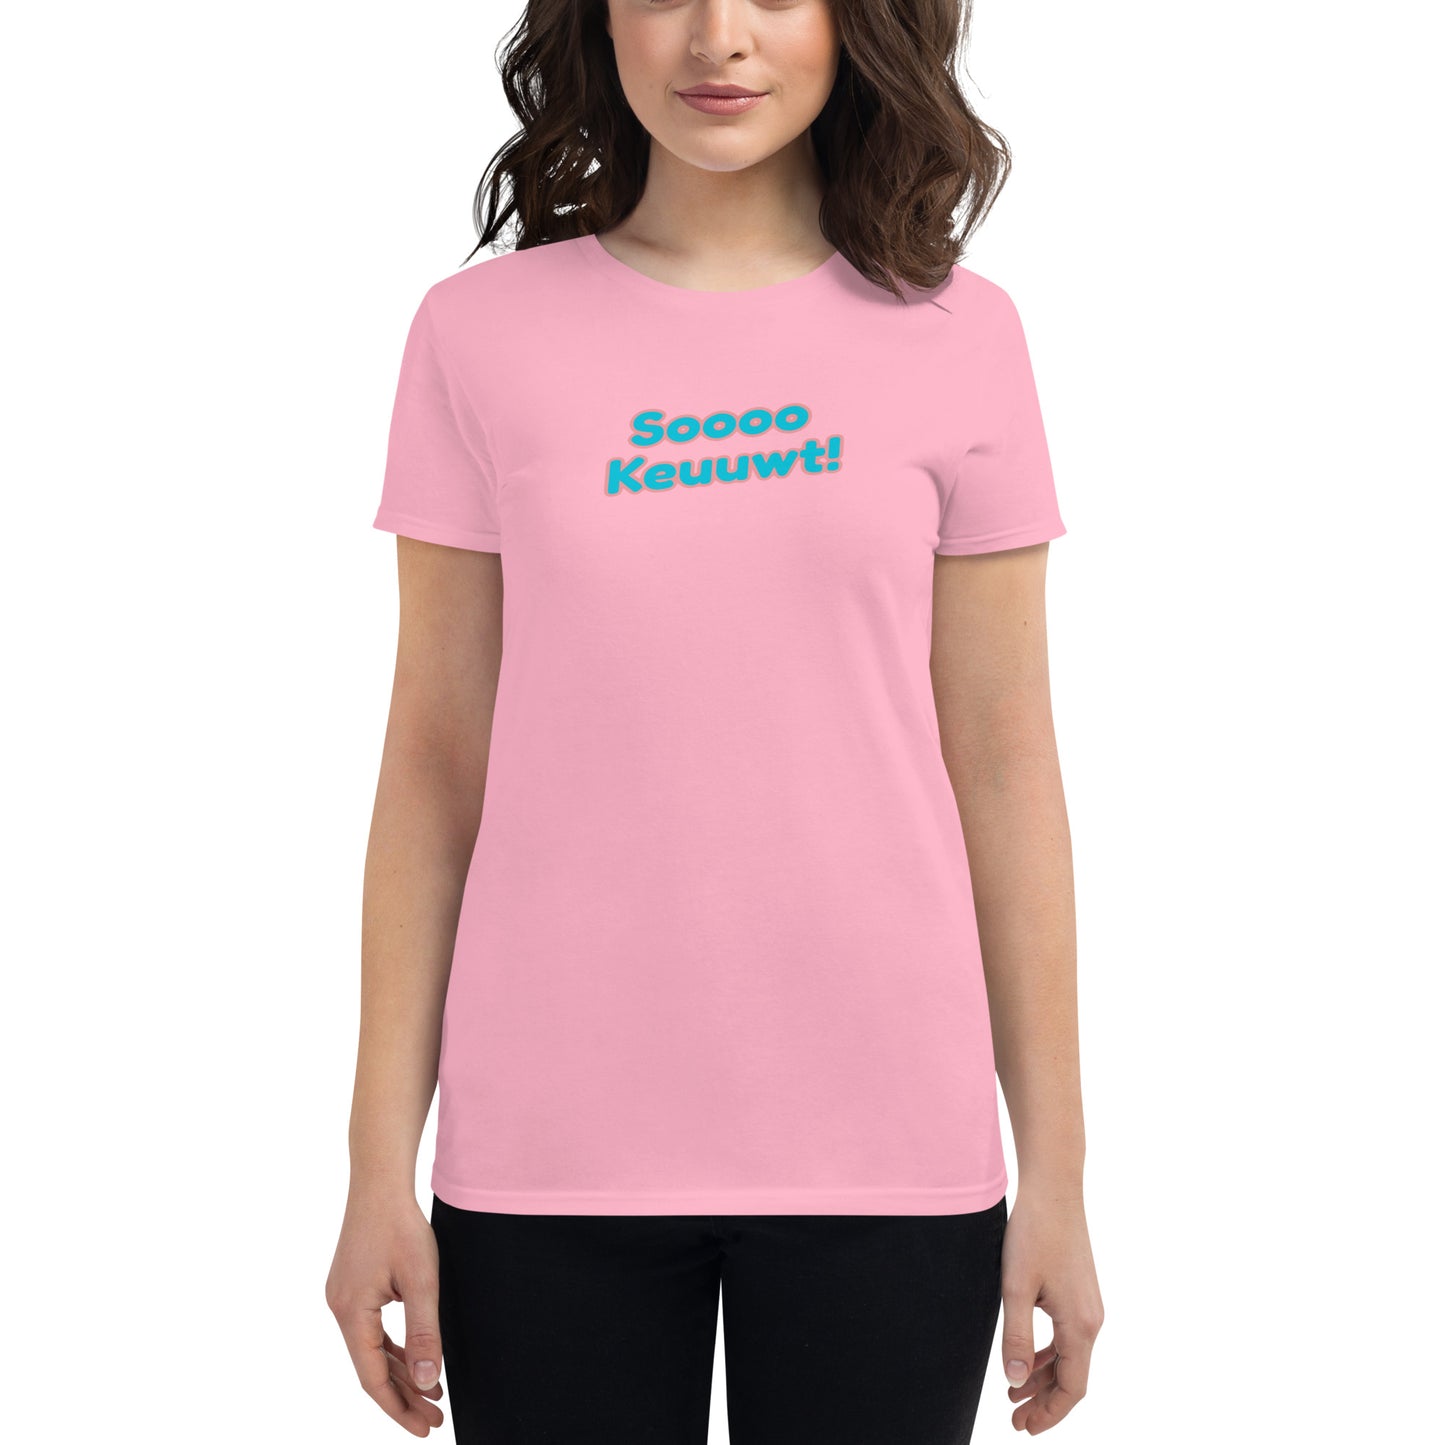 "Soooo Keuuwt!" Women's short sleeve t-shirt